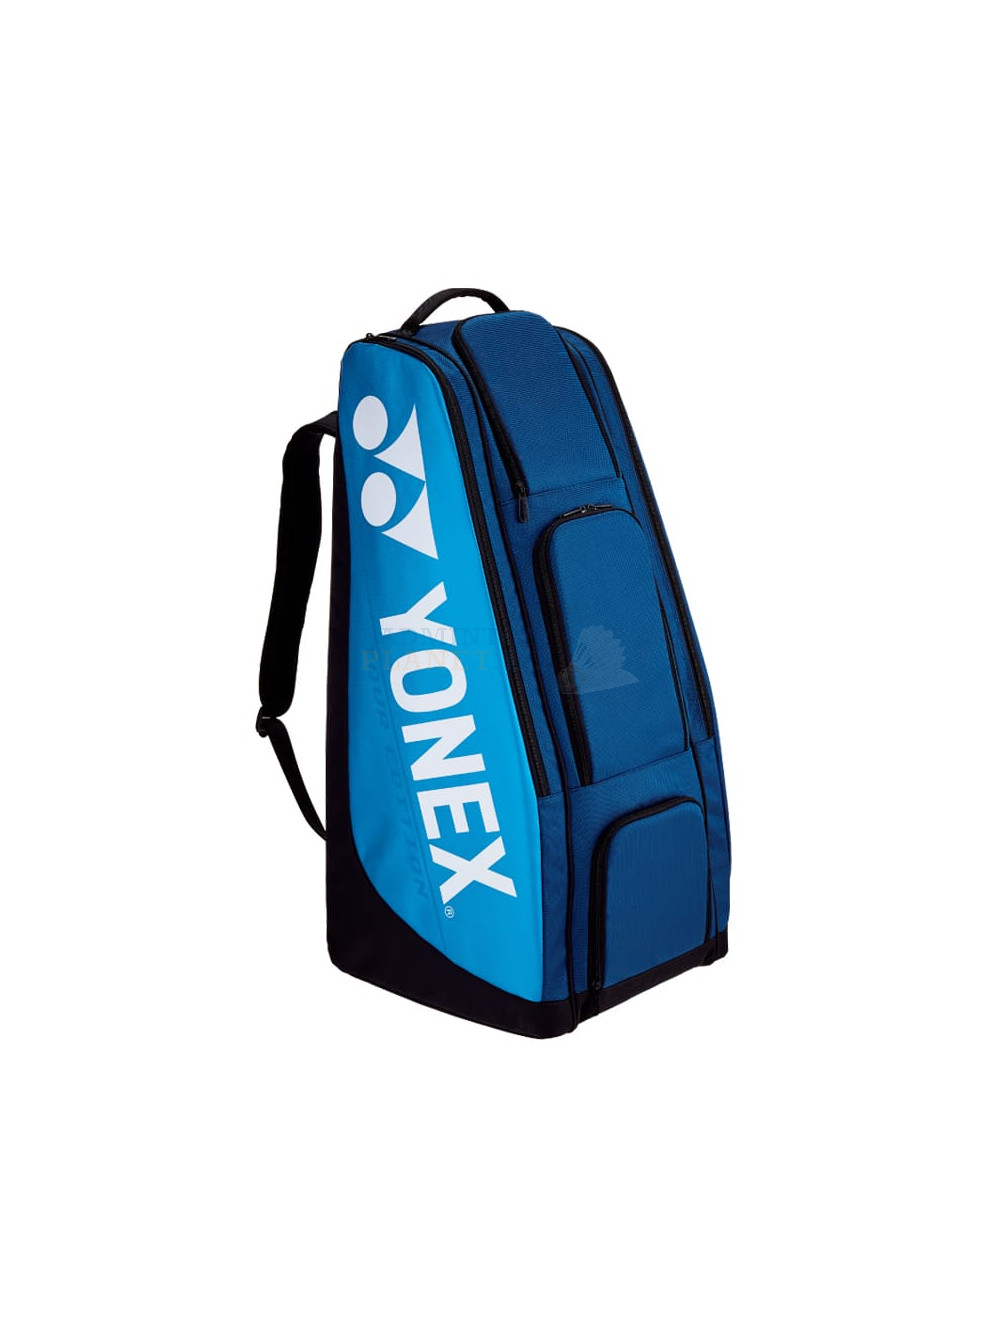 YONEX Stand Backpack Racket Tennis Badminton Squash Rucksack Blue BA92019EX 